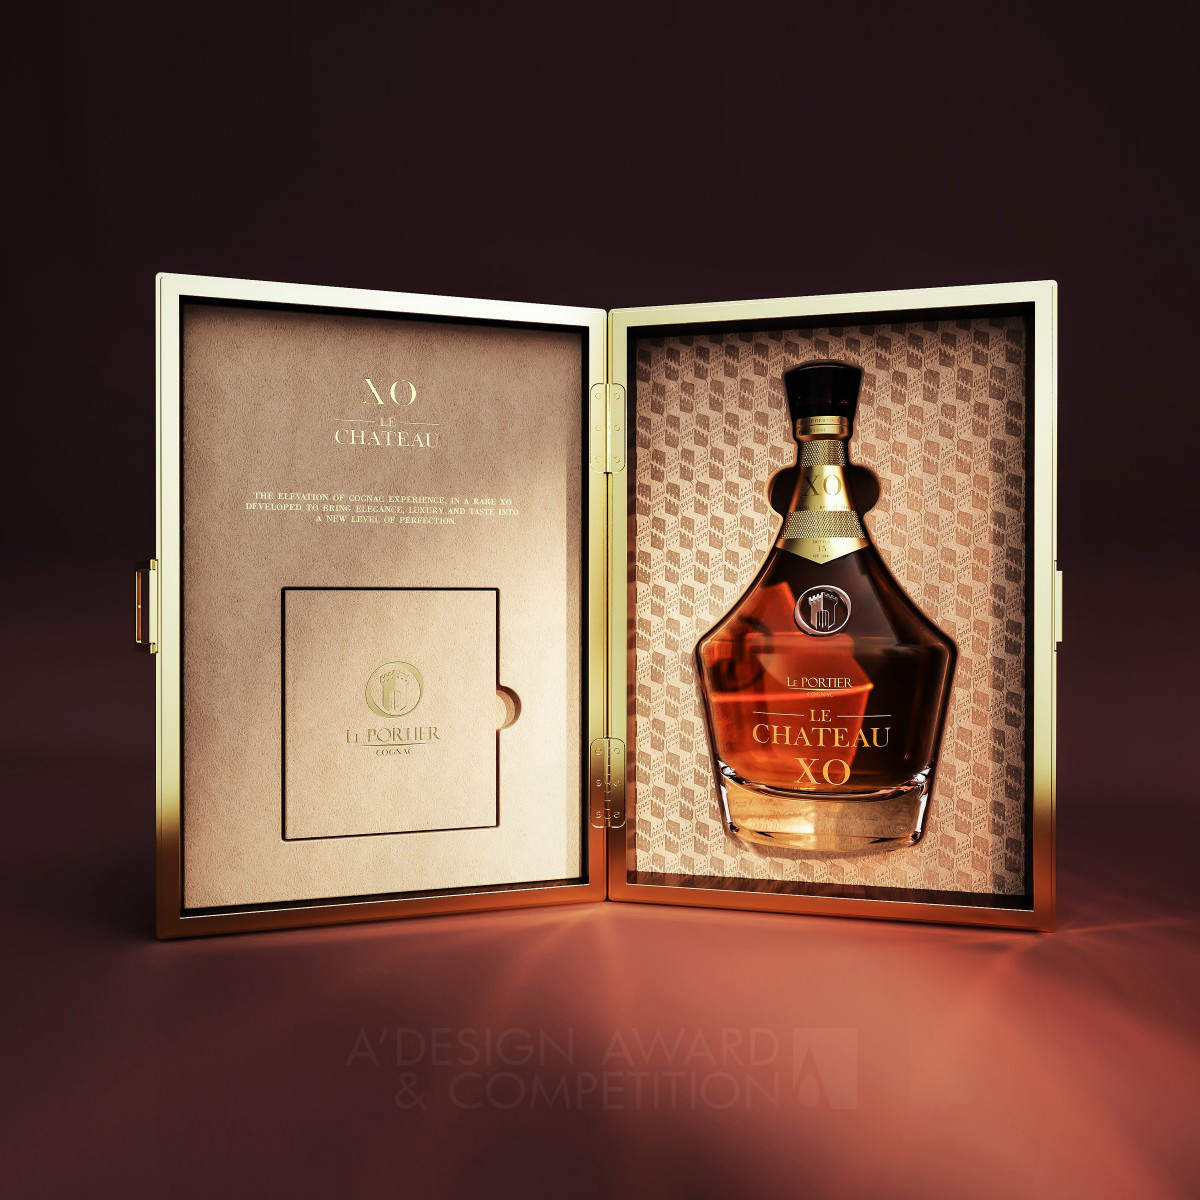 Le Chateau XO Luxury Cognac by Tiago Russo